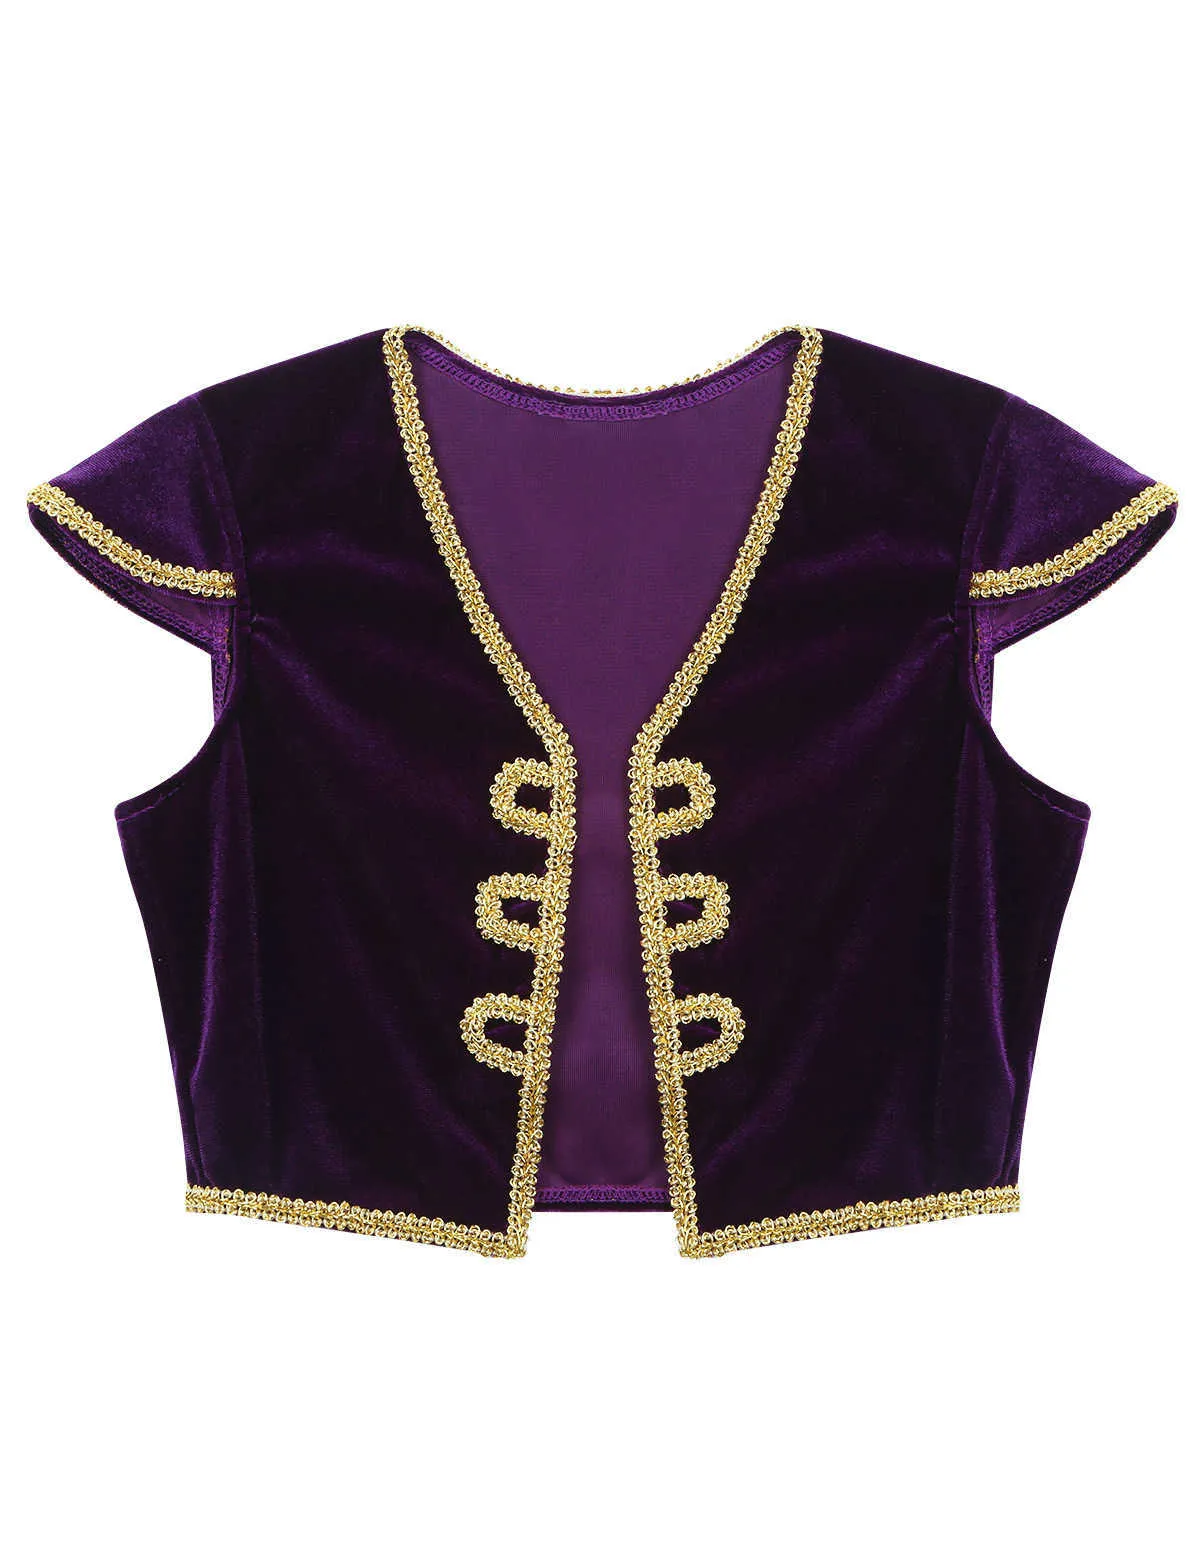 Miúdos Boys Fancy Arábia Príncipe Costumes Cap Sleeves Waistcoat com calças para Halloween Cosplay Fairy Parties Vestir-se Q0910